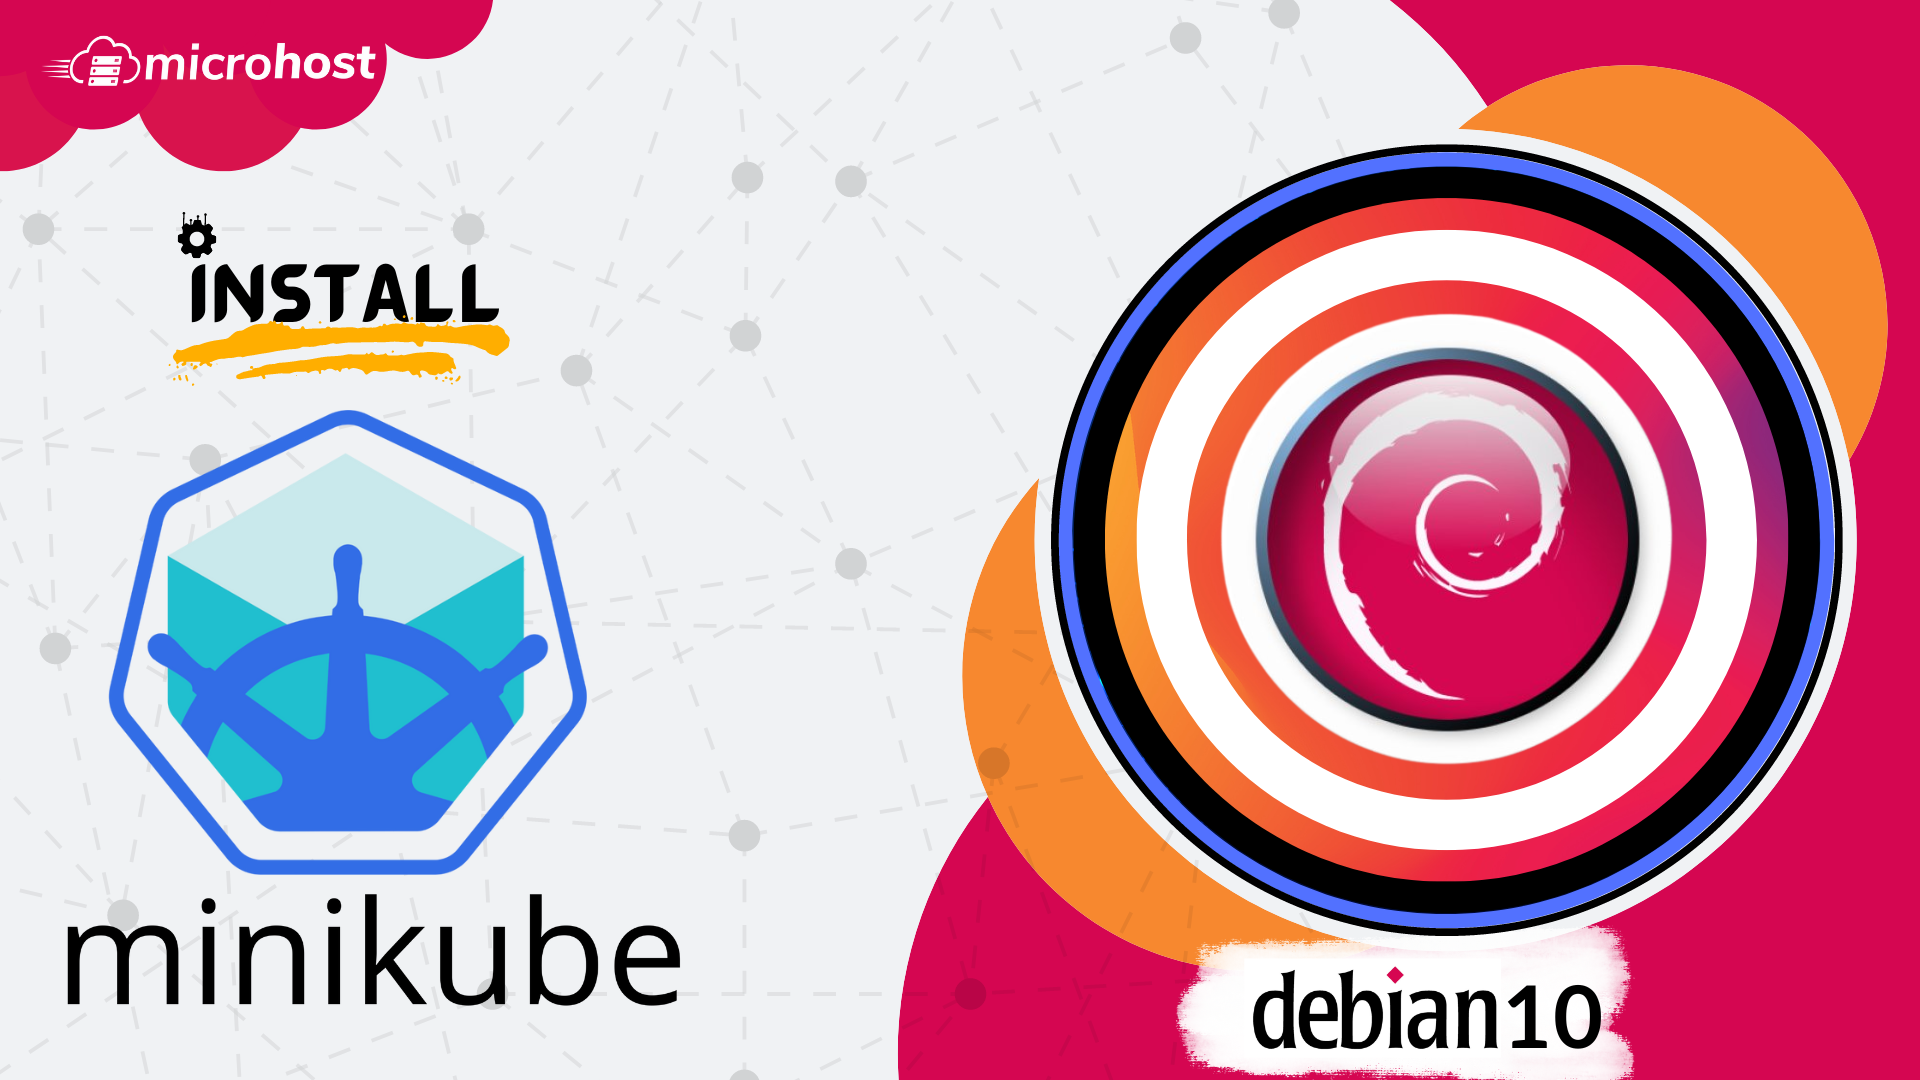 How to install Minikube on Debian